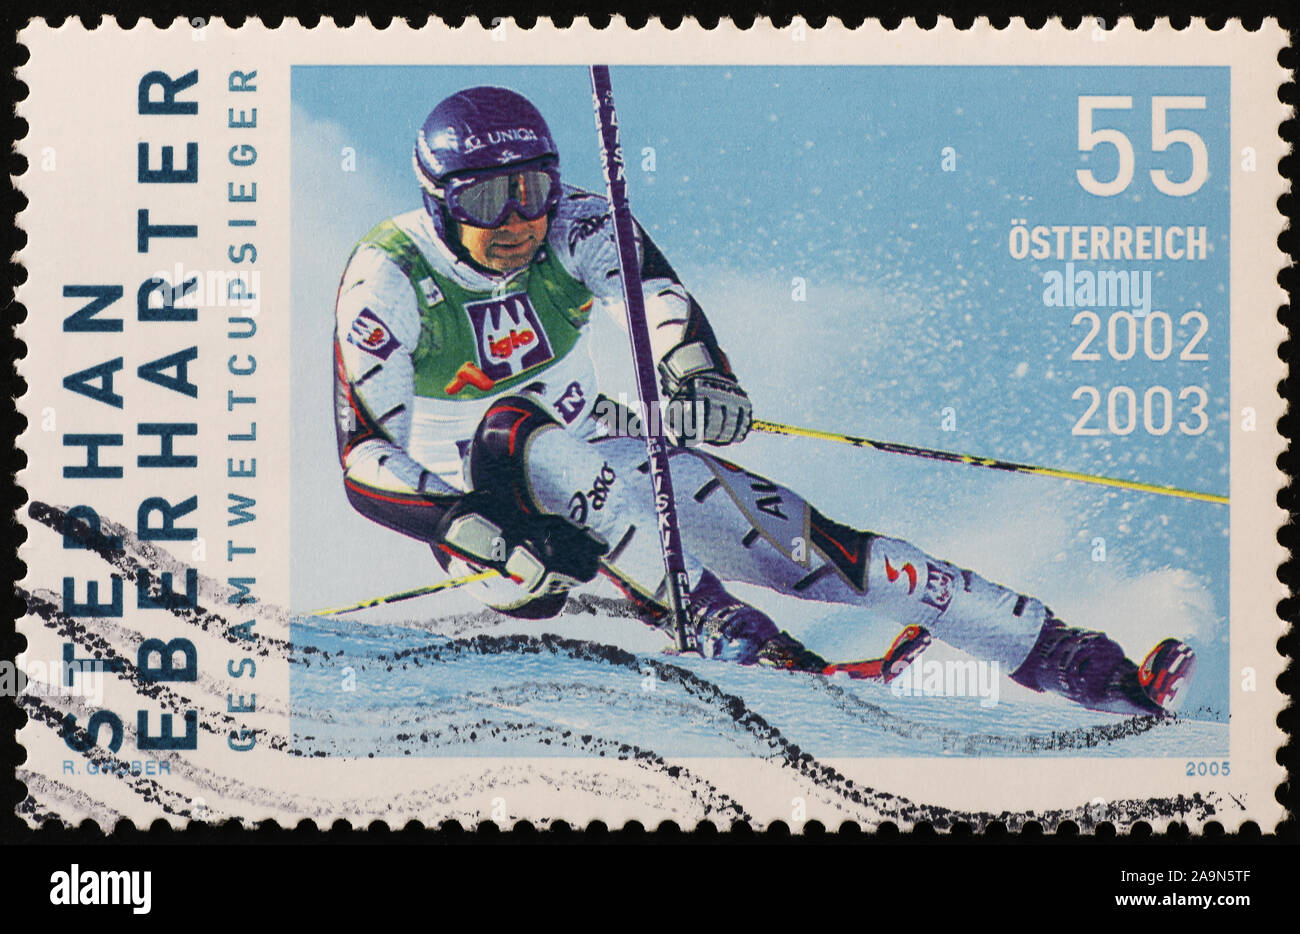 Ski racer Stephan Eberharter on austrian postage stamp Stock Photo